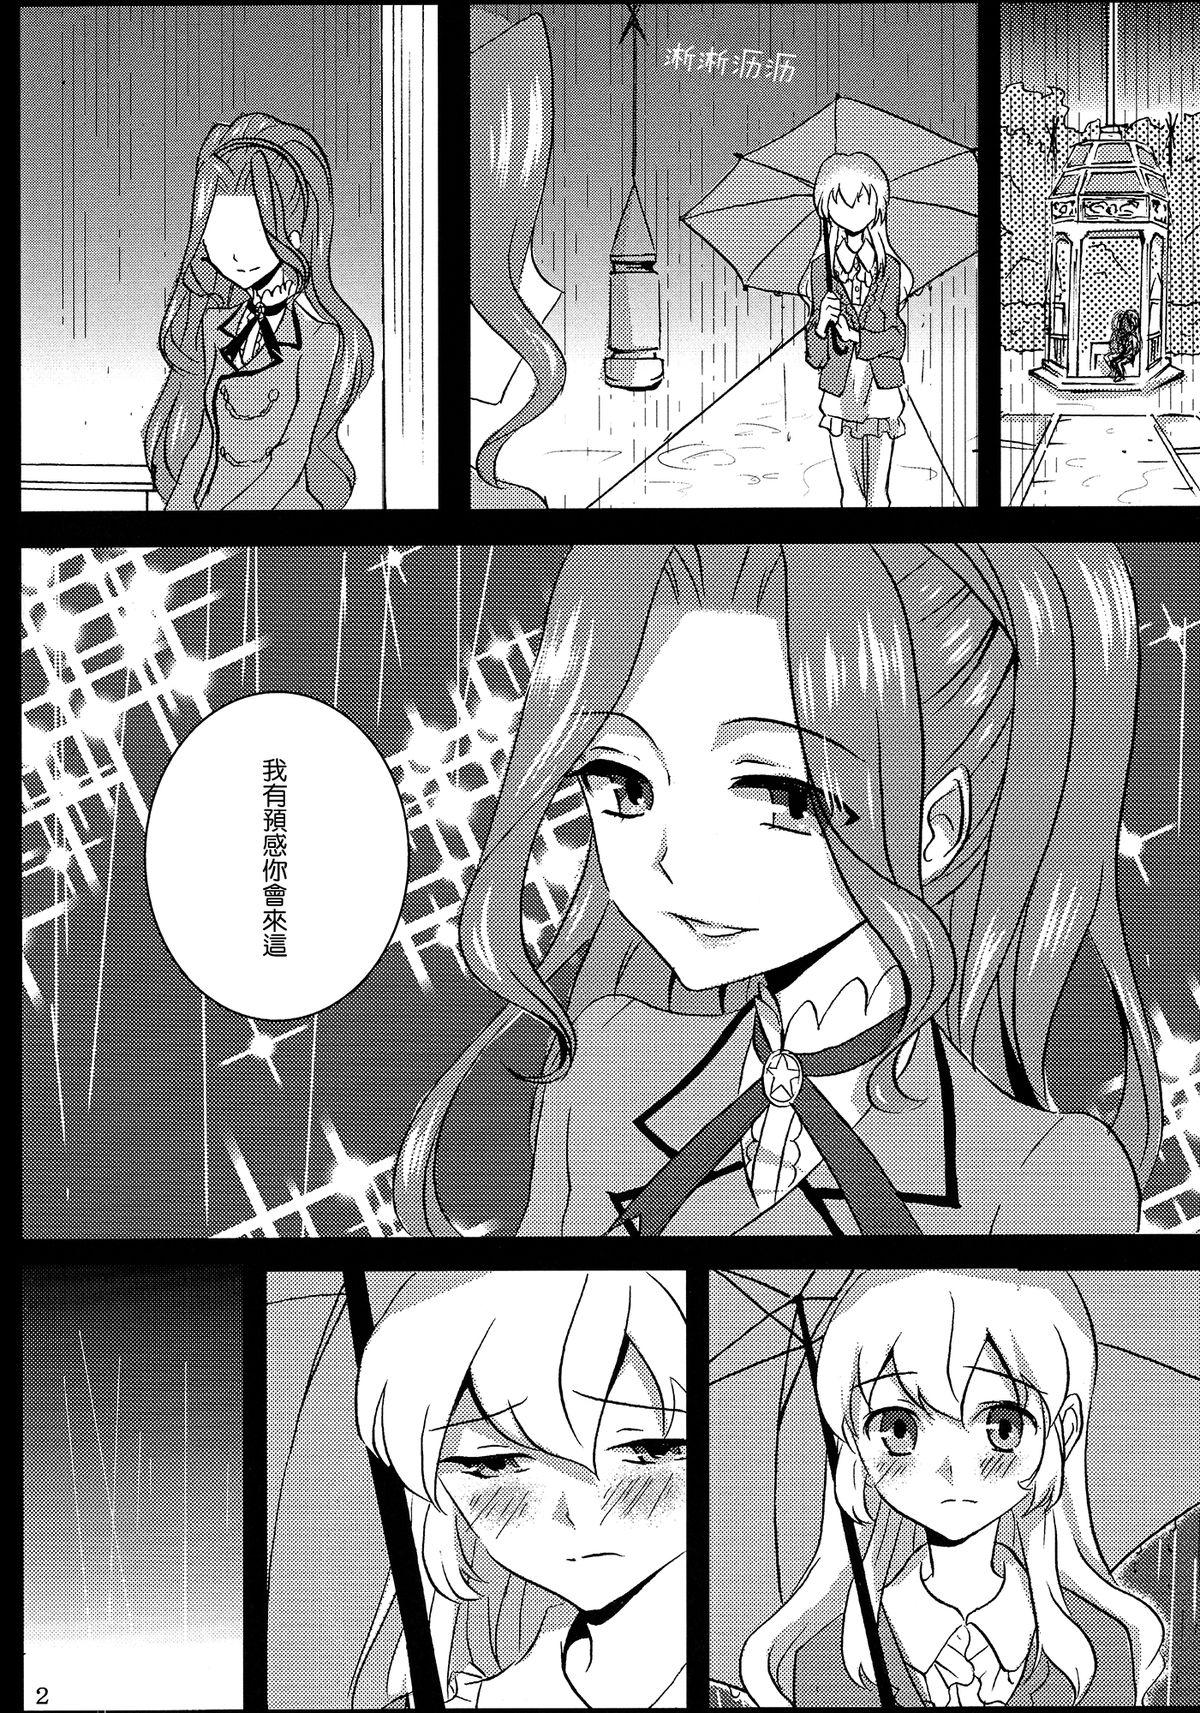 Pounded rainy day - Aikatsu Hand Job - Page 4